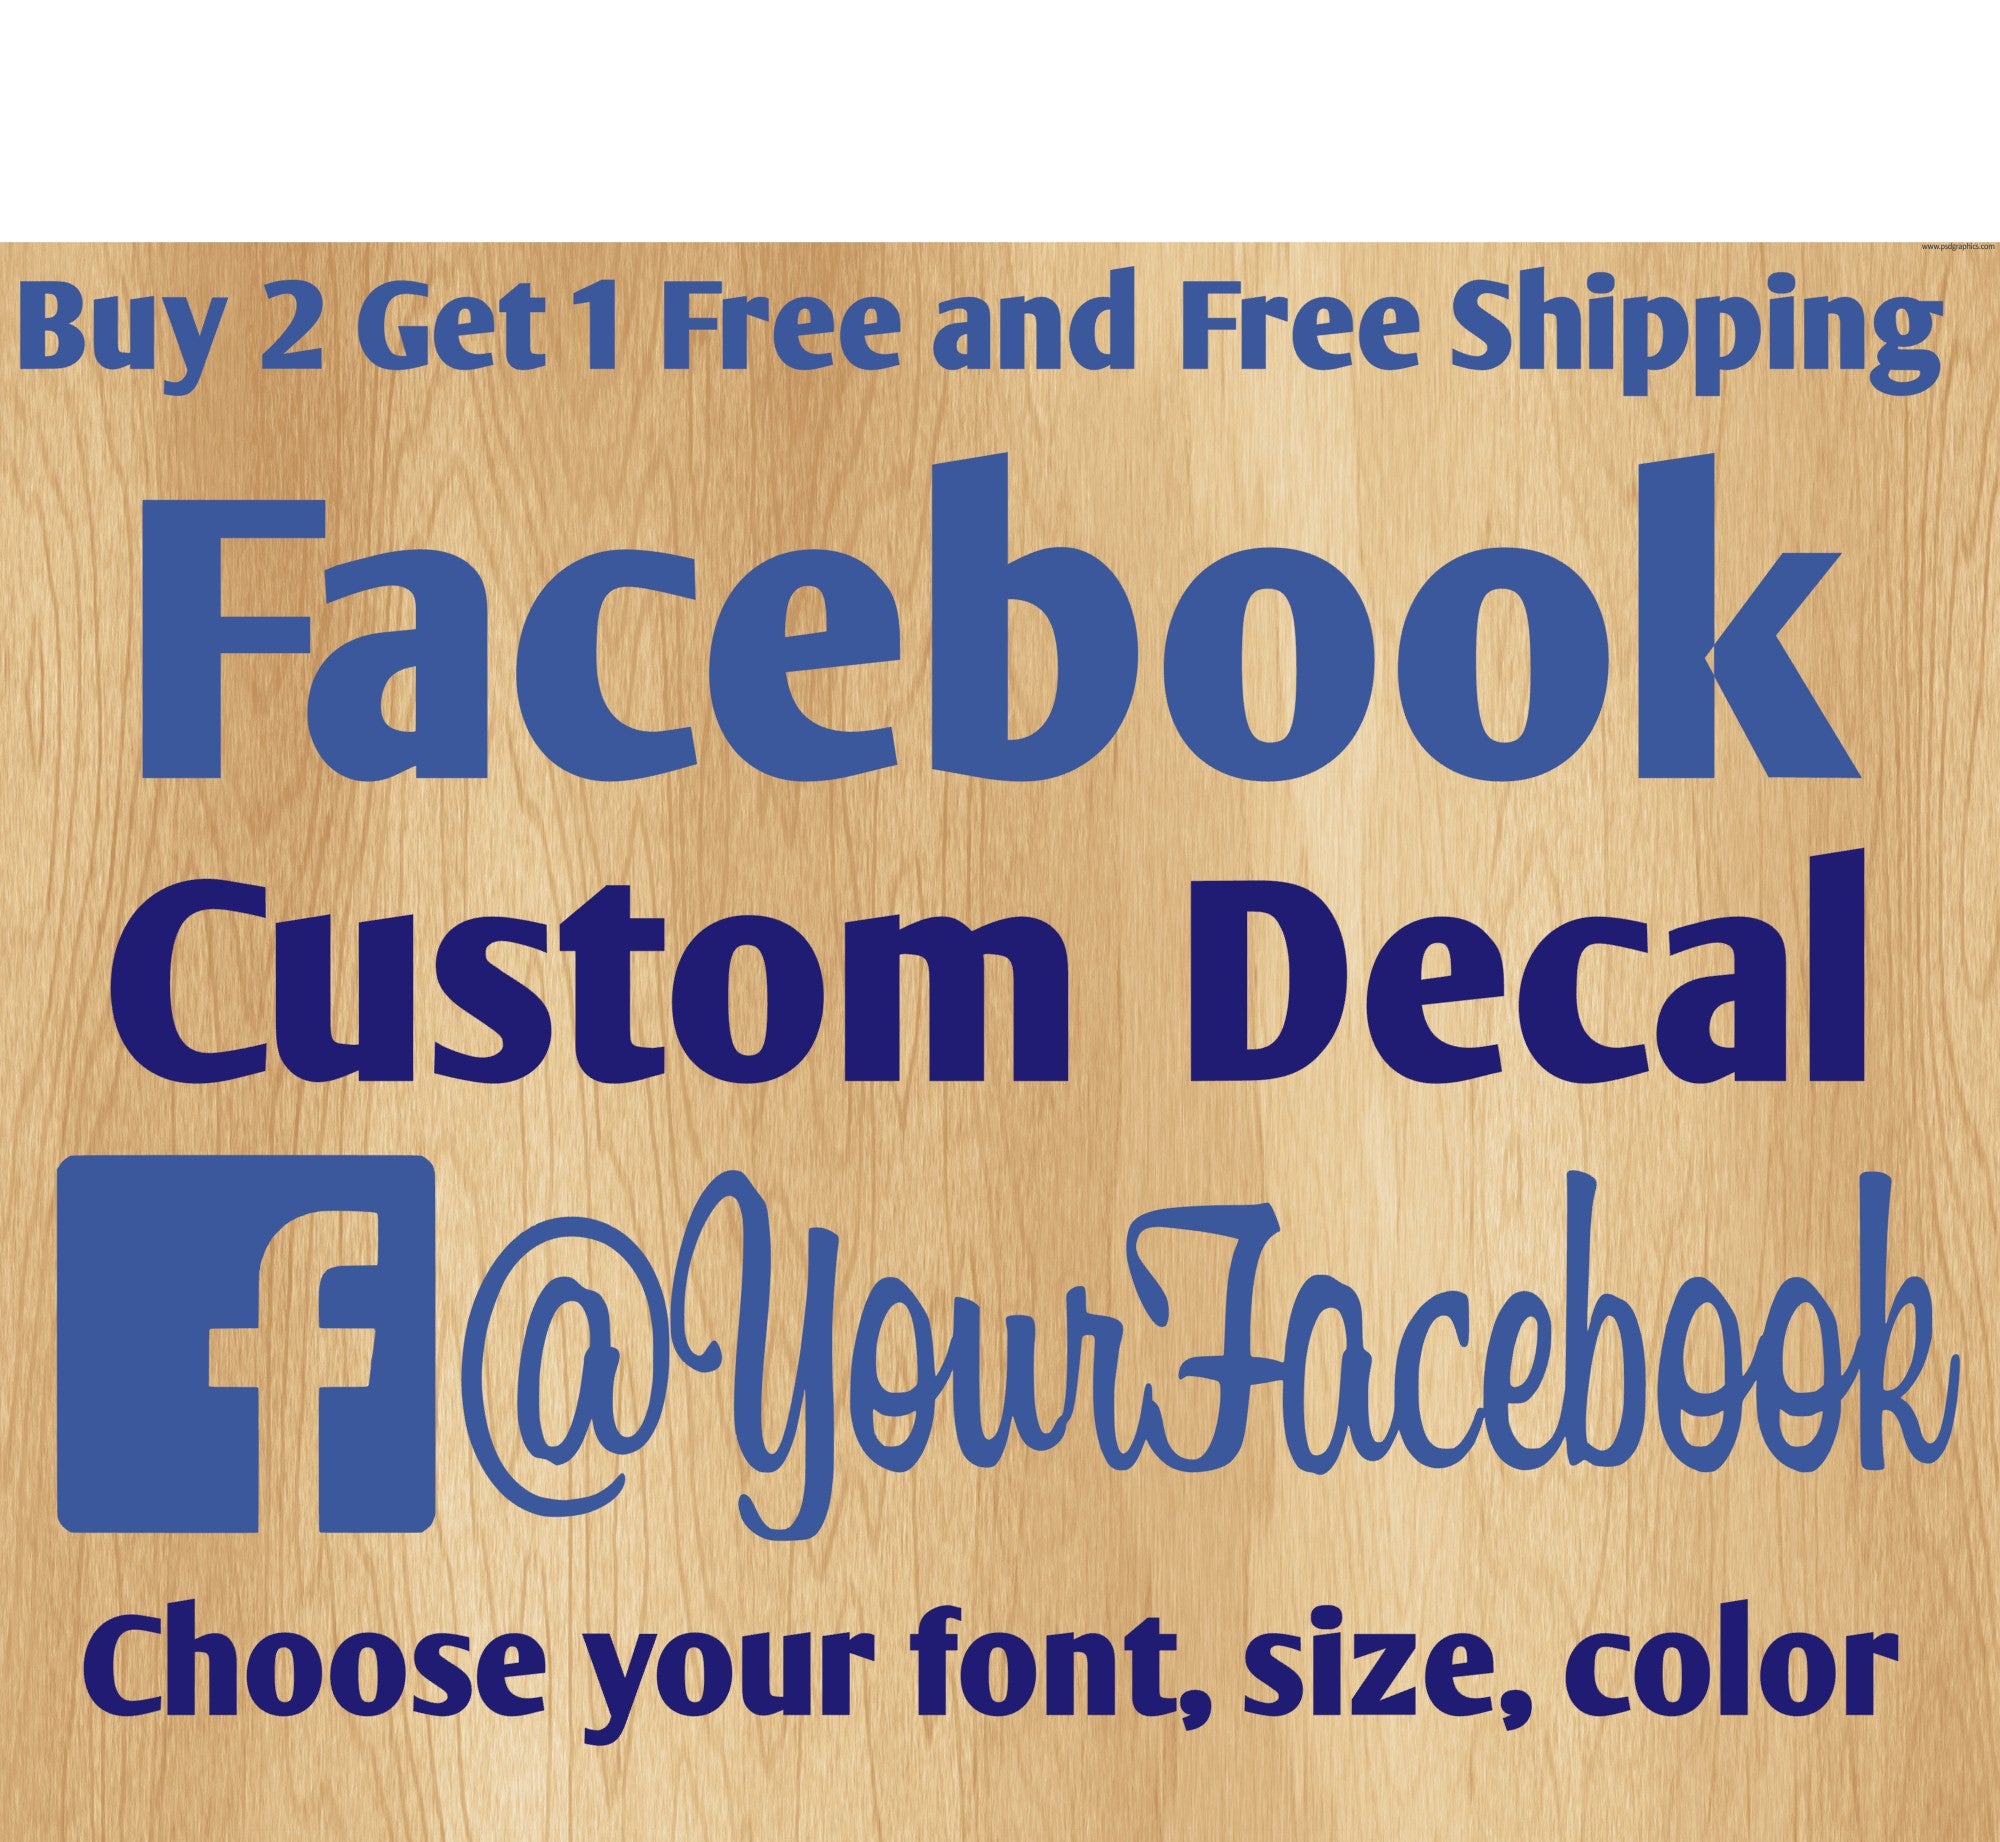 Custom Stickers - Free Shipping